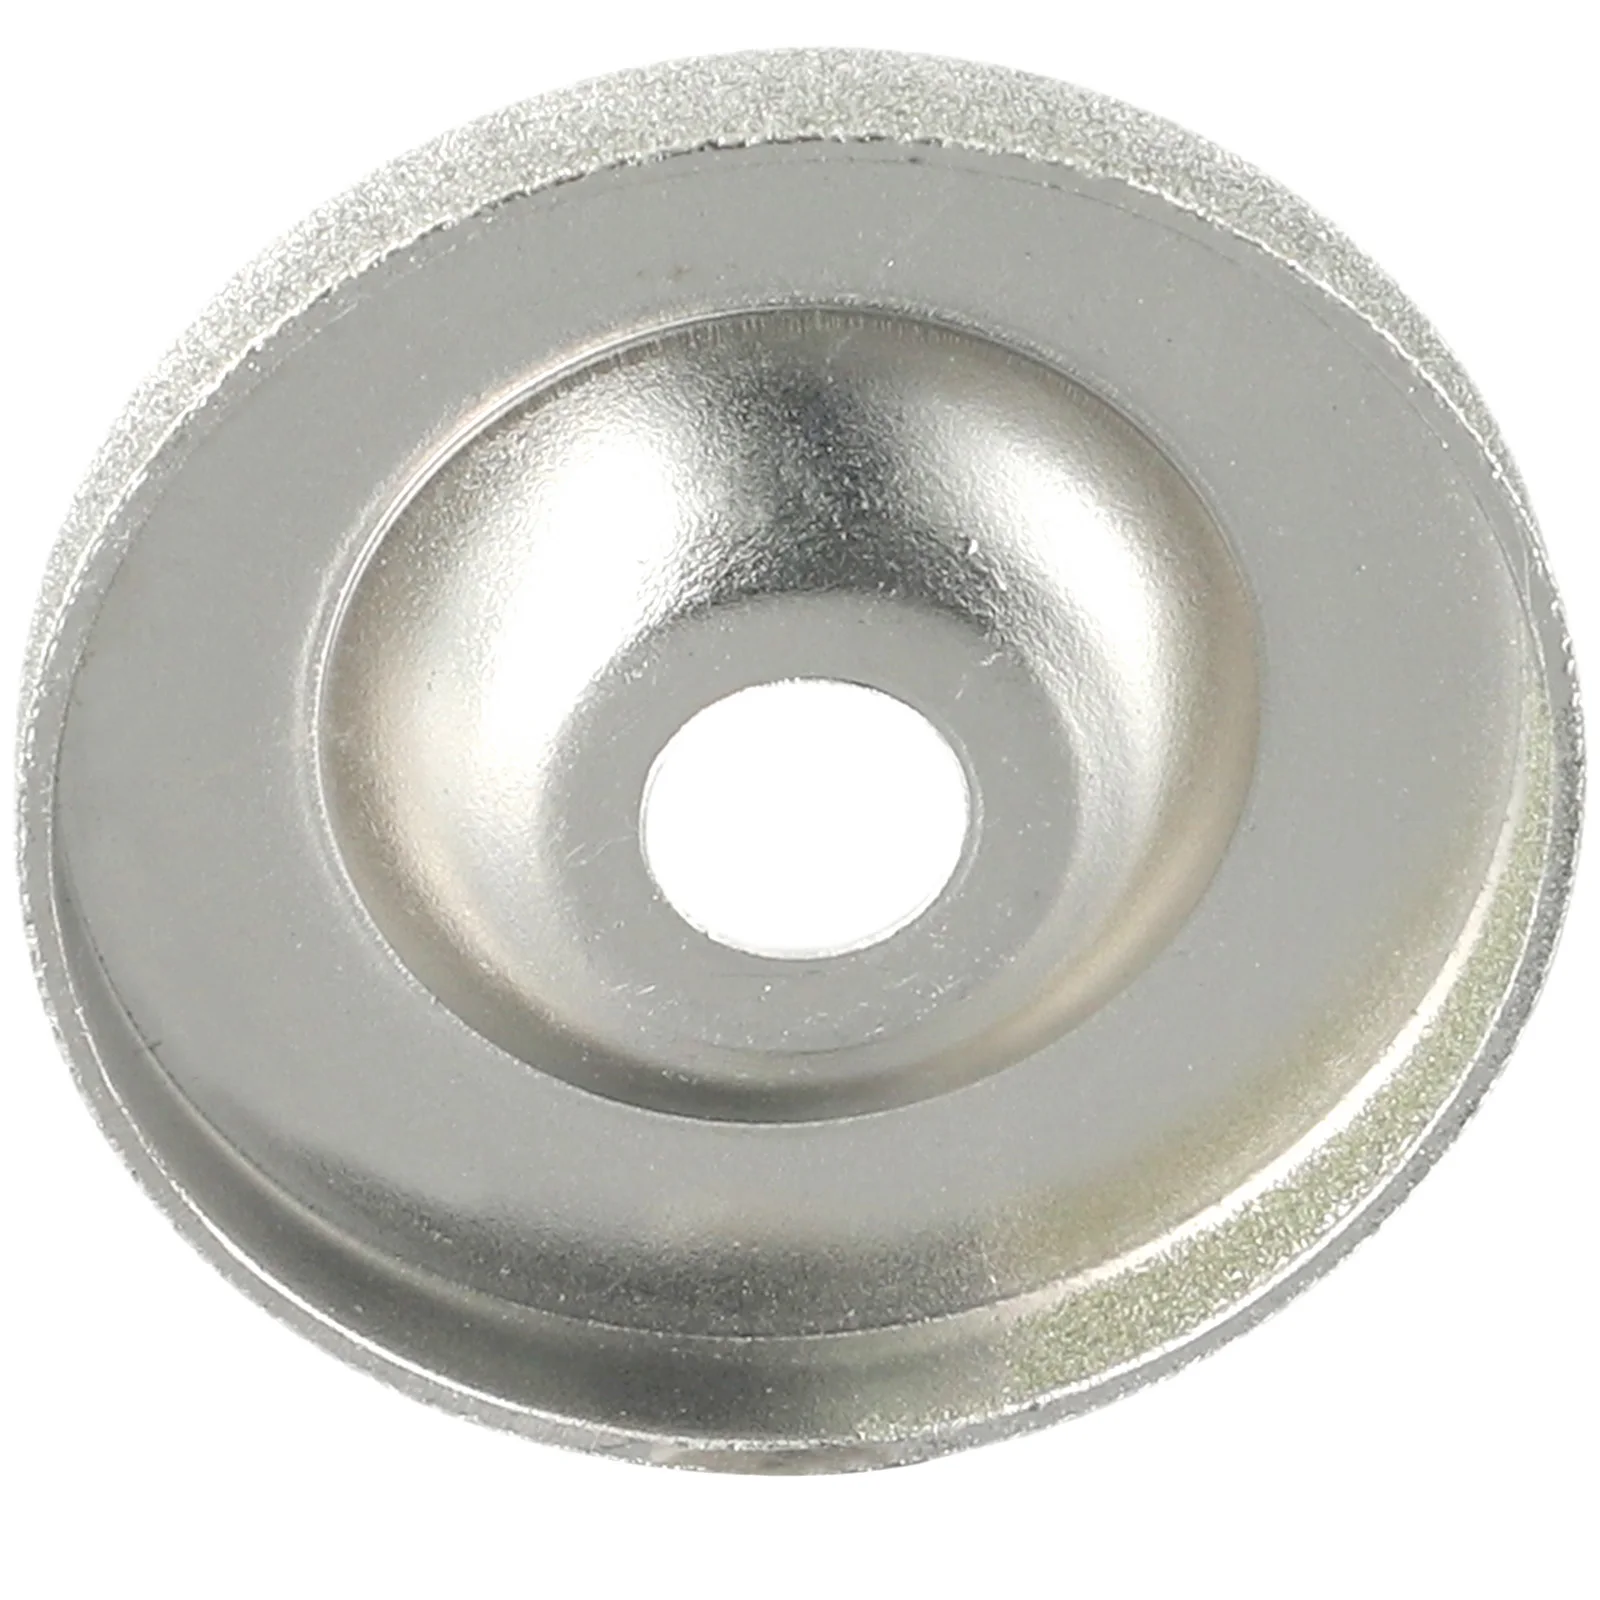 

1pc 50mm Diamond Grinding Wheel 180 Grit Grinder Sharpener Trimming Rotary Tool Diamantado Schleifscheibe Ferramentas